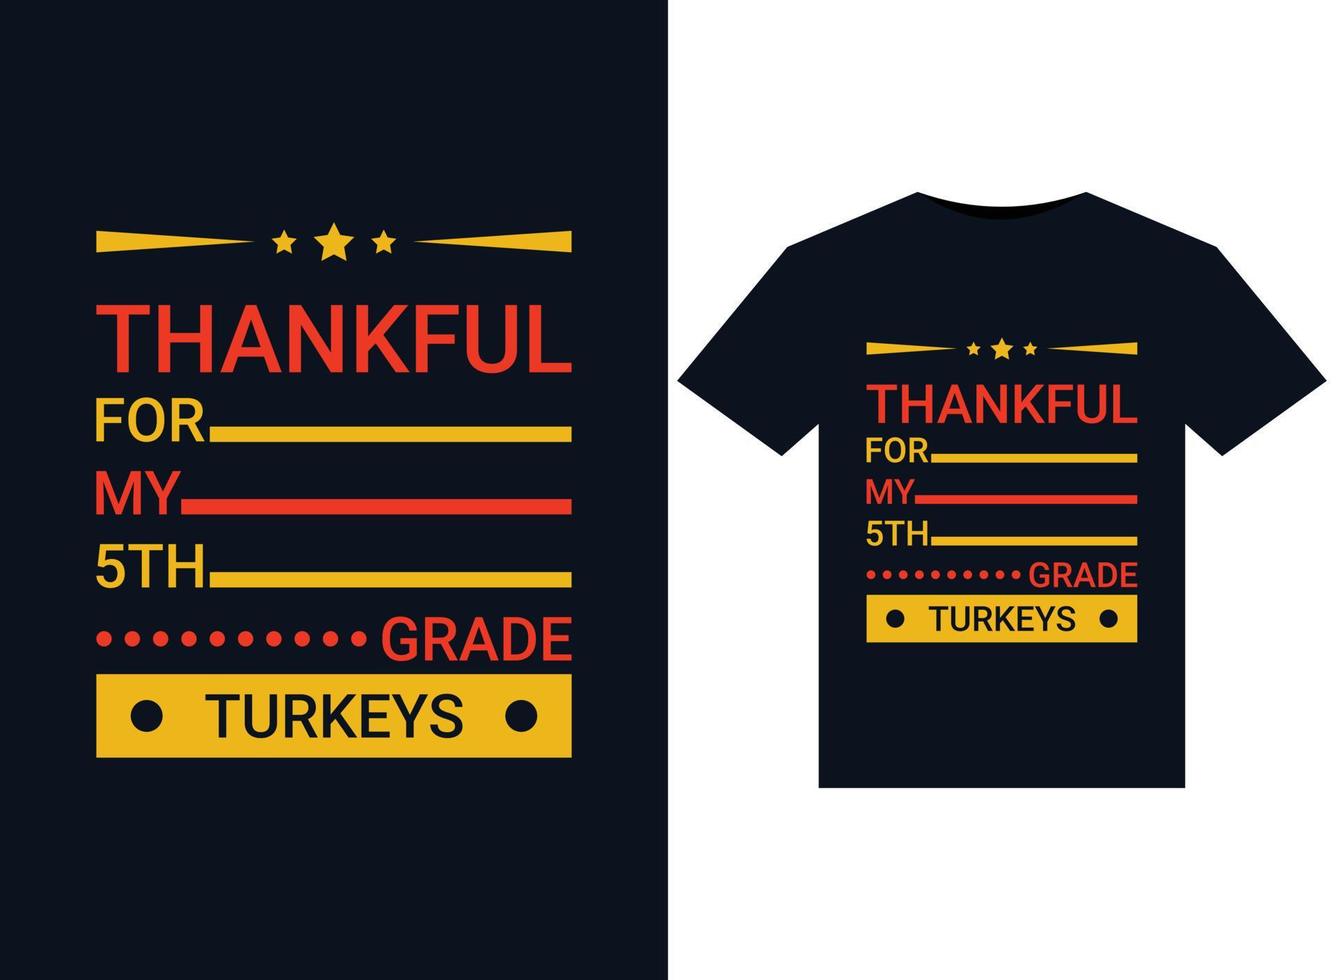 Thankful For My 5th Grade Turkeys illustration for print-ready T-Shirts design vector